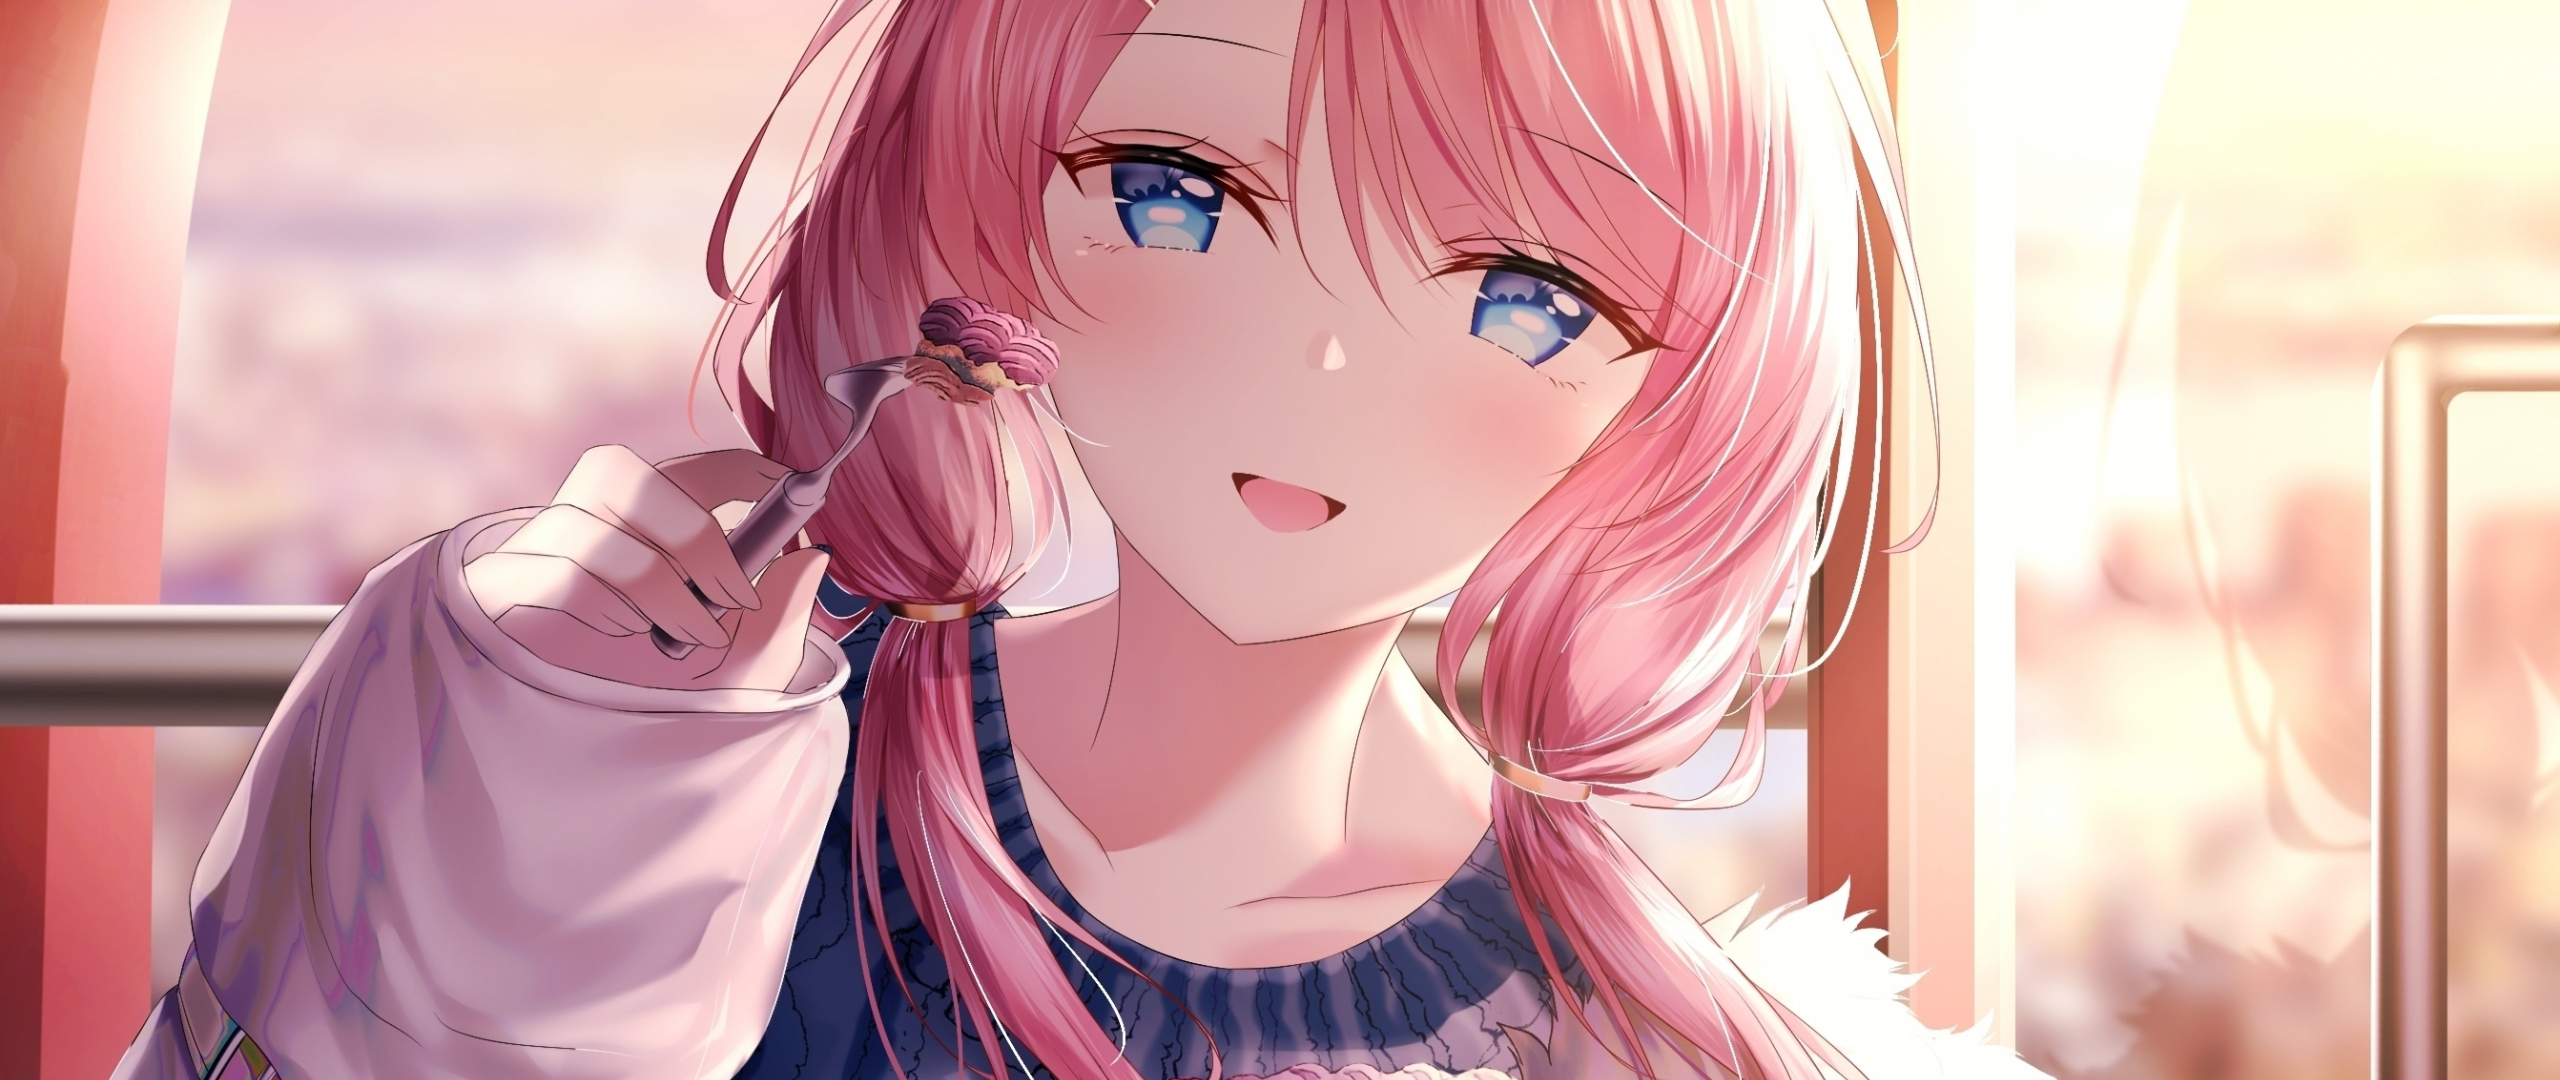 Download Cute Anime Girl Beautiful Eating Cake 2560x1080 Wallpaper Dual Wide 2560x1080 Hd Image Background